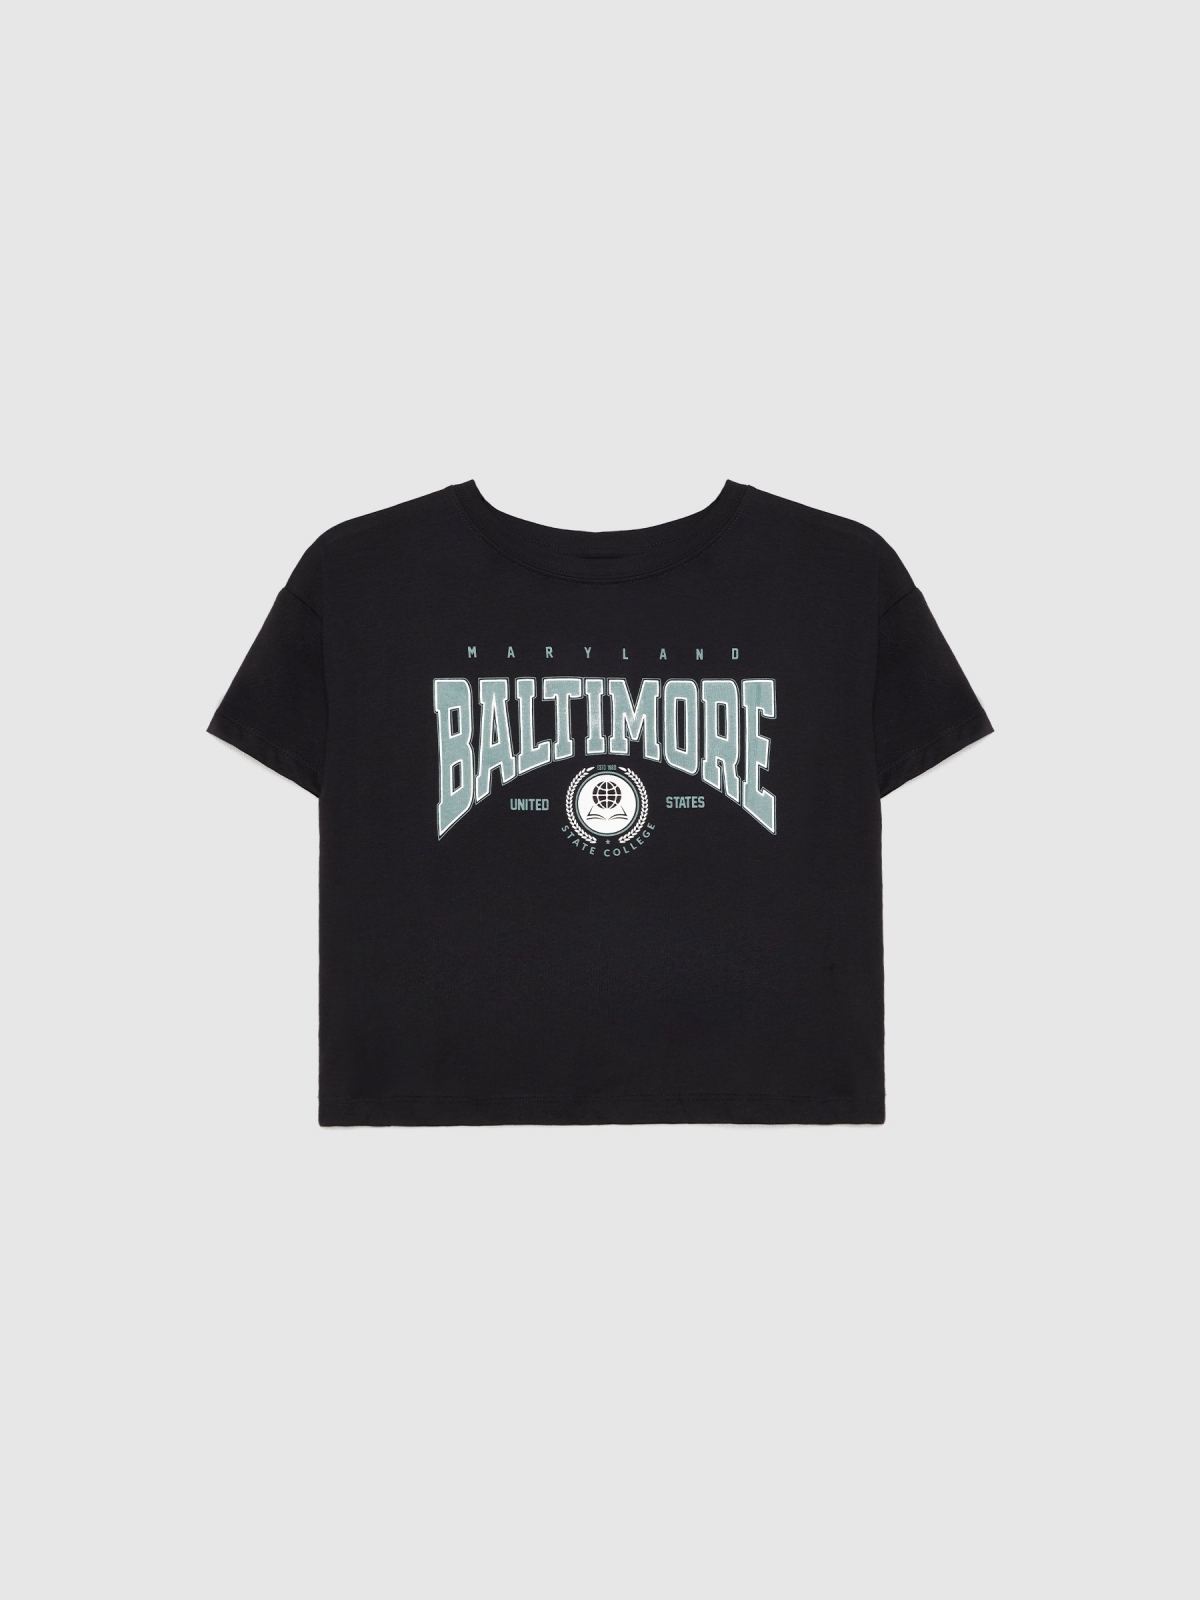  Camiseta Baltimore negro